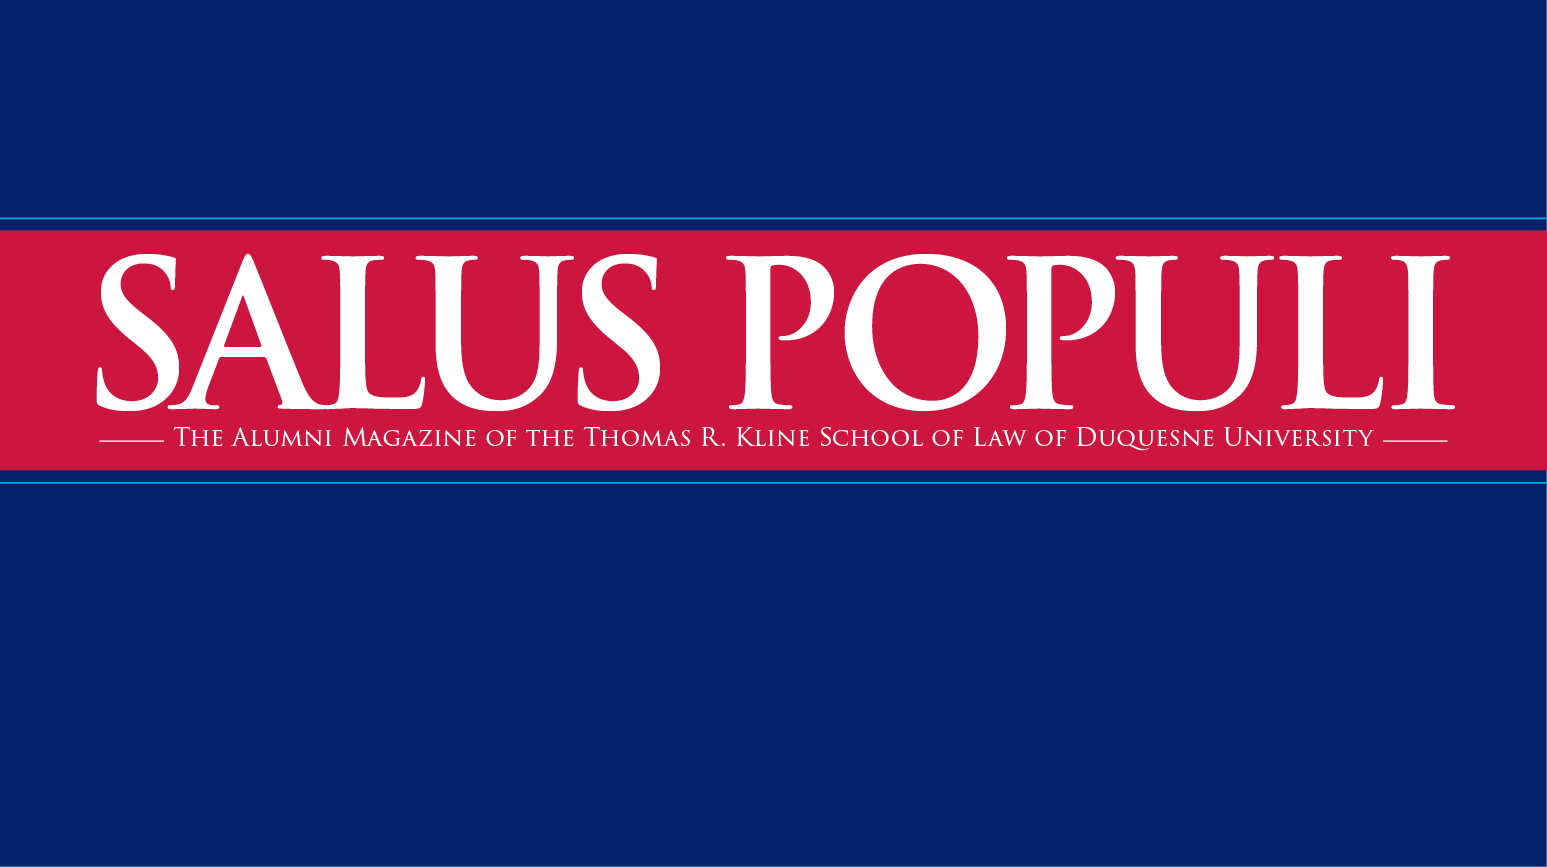 Salus Populi Magazine: The Alumni Magazine of the Thomas R. Kline School of Law of Duquesne University web masthead 